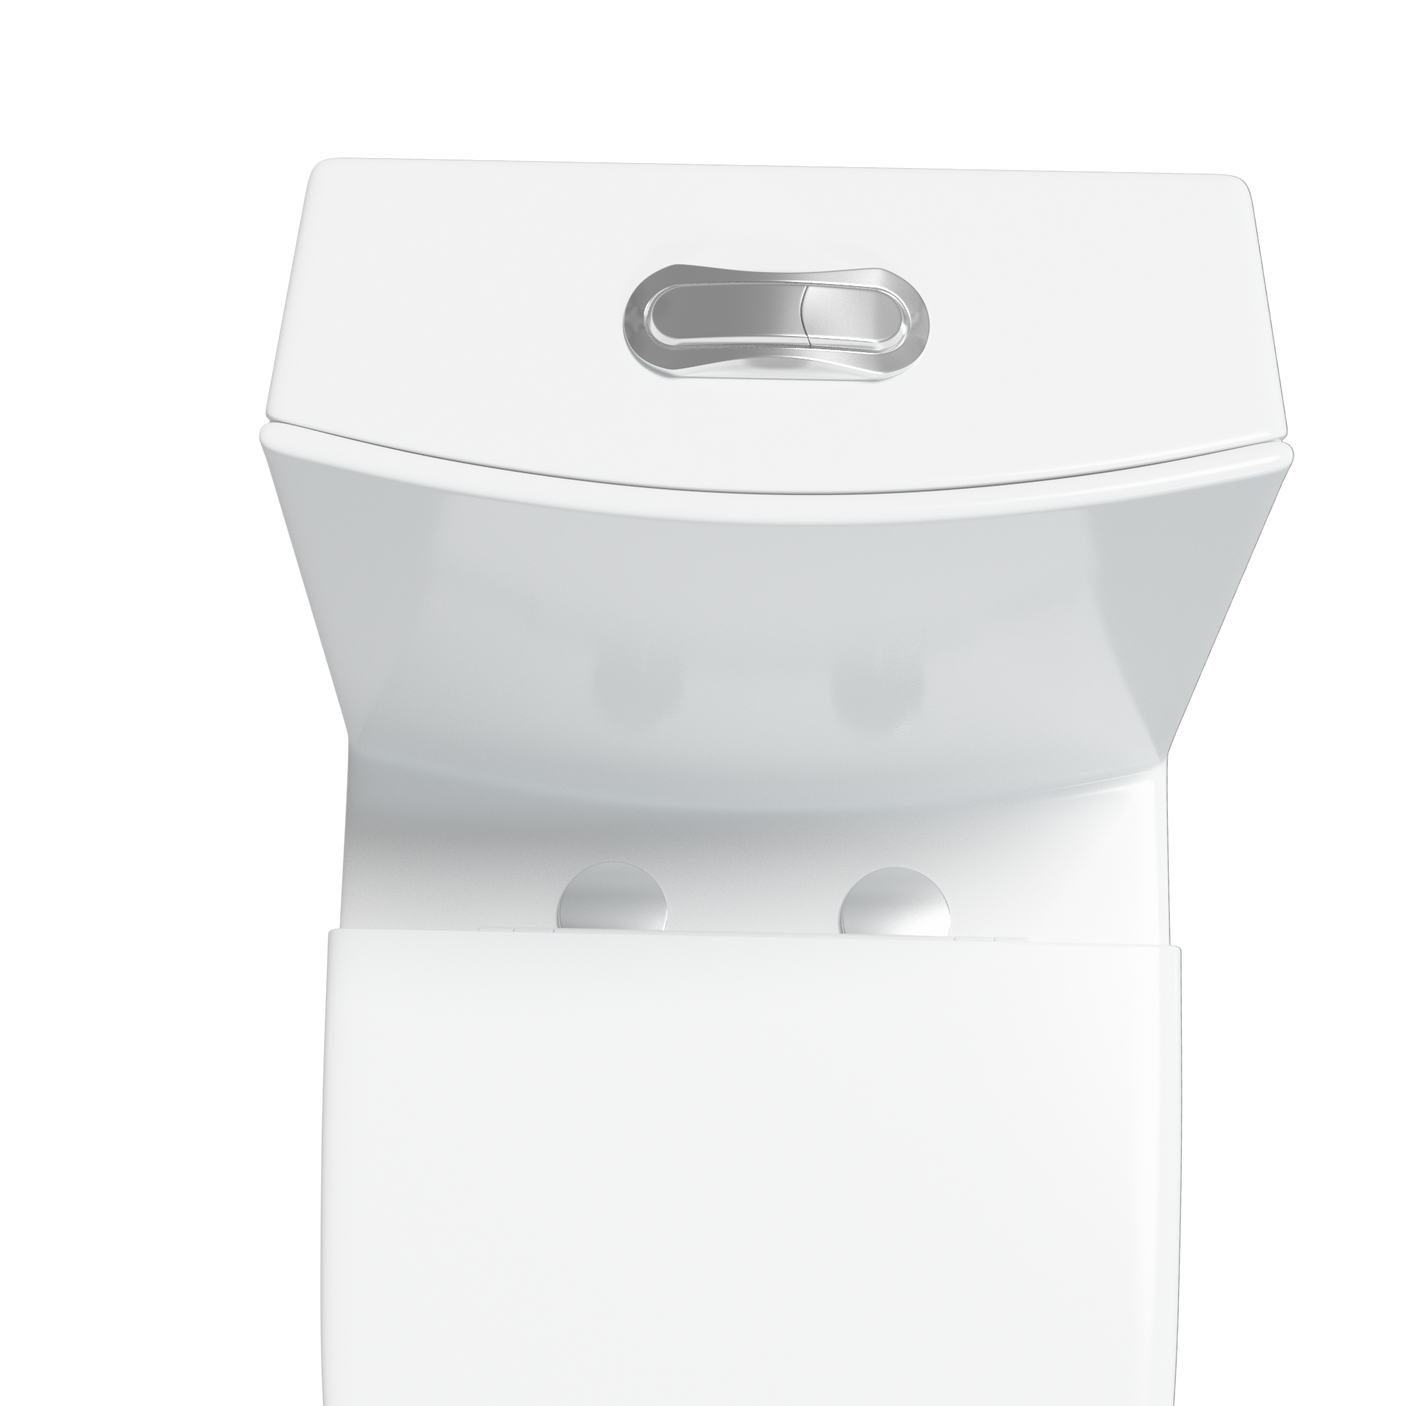 One Piece 1.1GPF/1.6 GPF Dual Flush Elongated Toilet